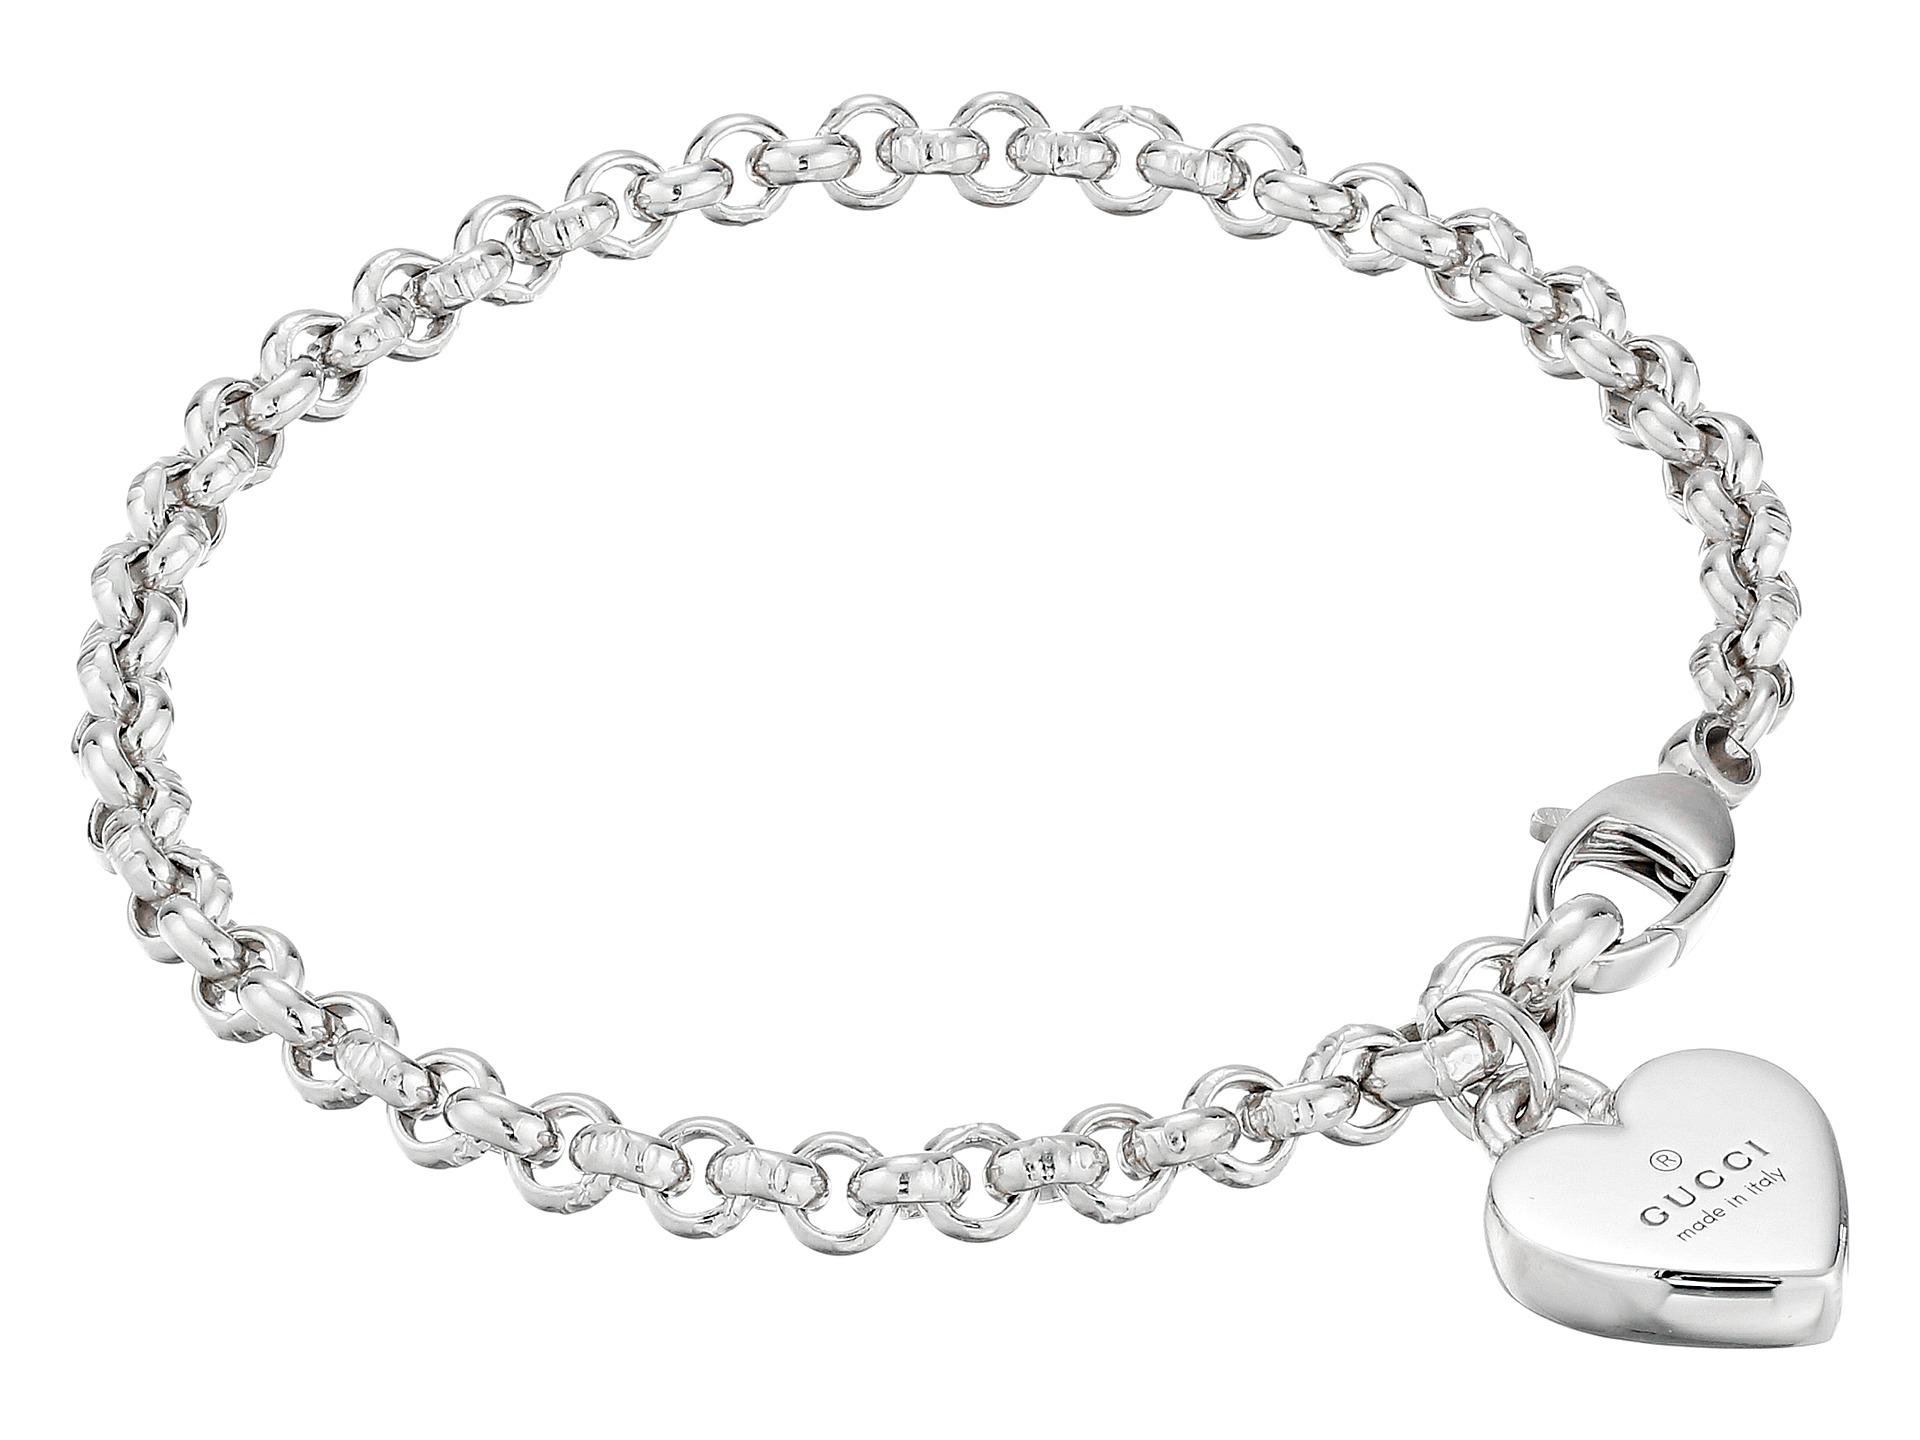 Lyst - Gucci Trademark Bracelet W/ Heart, Star And Interlocking G